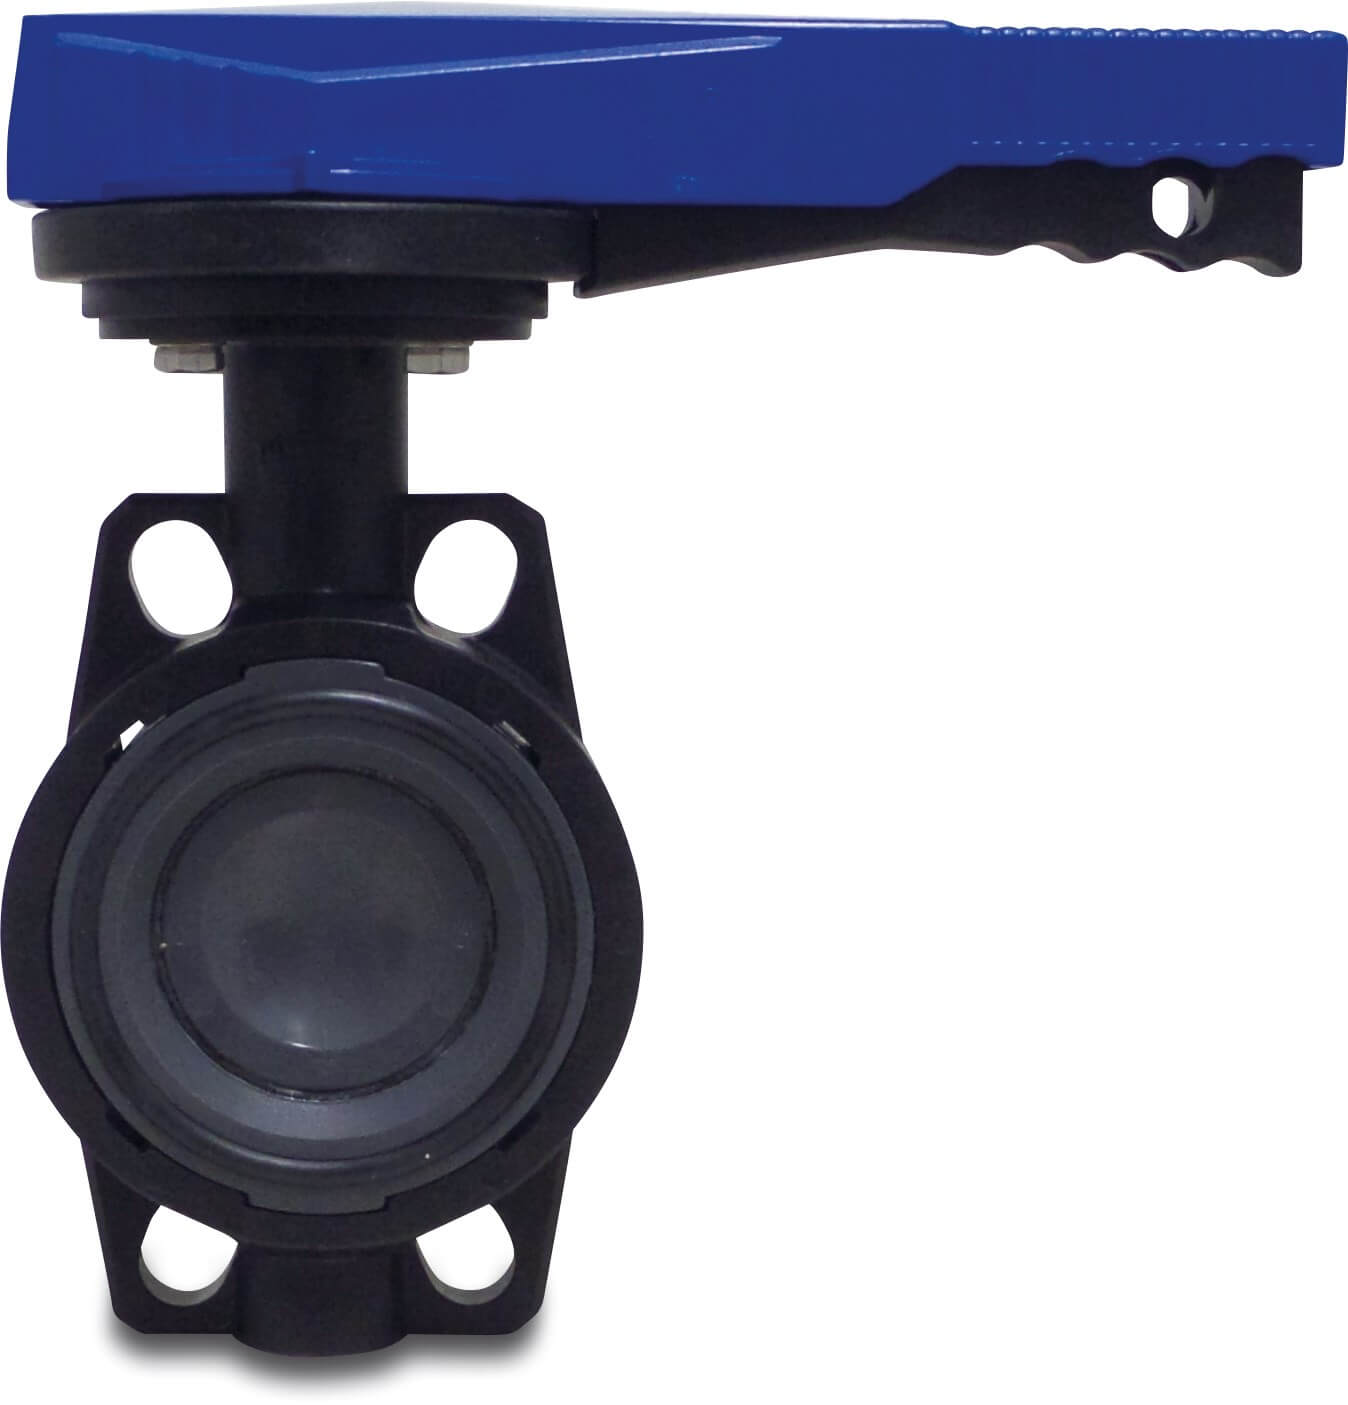 Hydro-S Butterfly valve PVC-U 110 mm flange 10bar DN100 grey PN10 type 7500